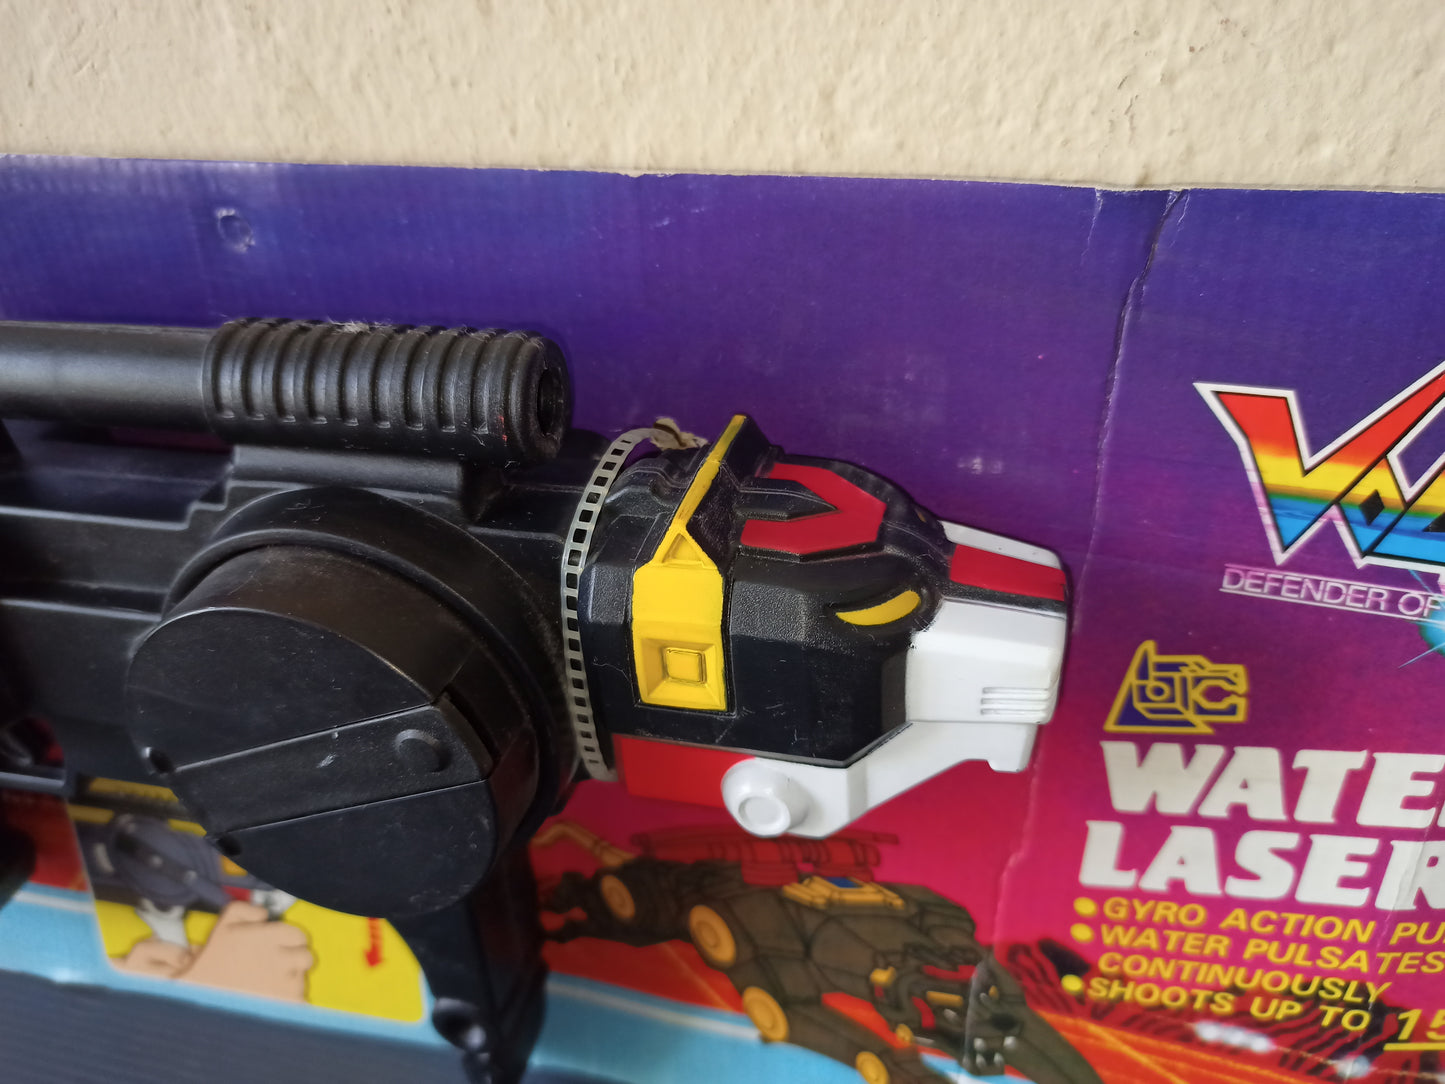 Water Laser Water Gun Voltron, Litardi original 1984